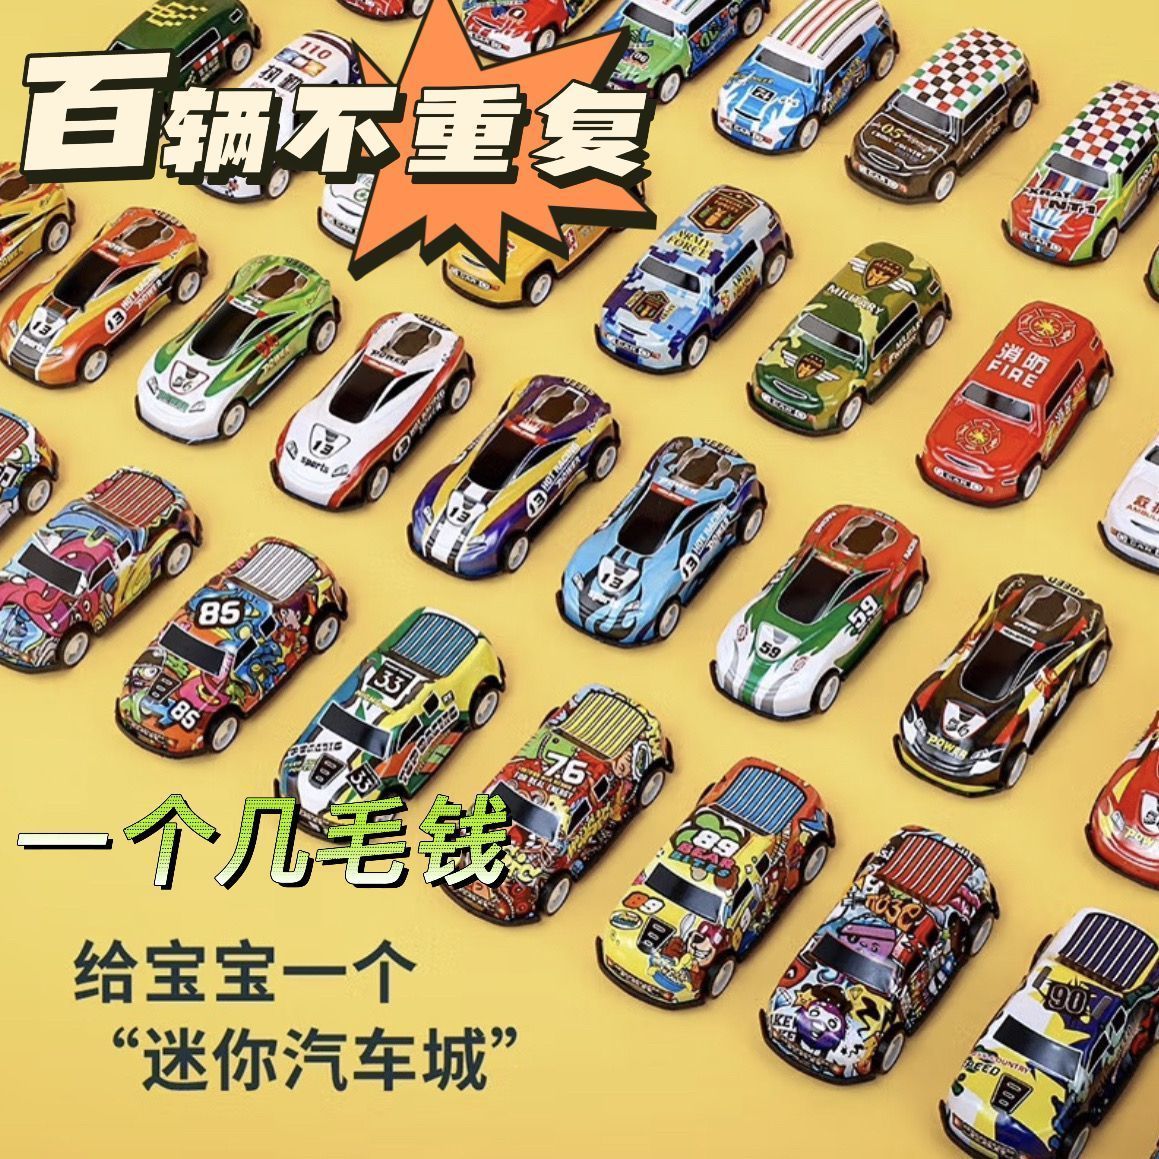 100 pcs power control car mini alloy children‘s toy car children present pocket toy kindergarten